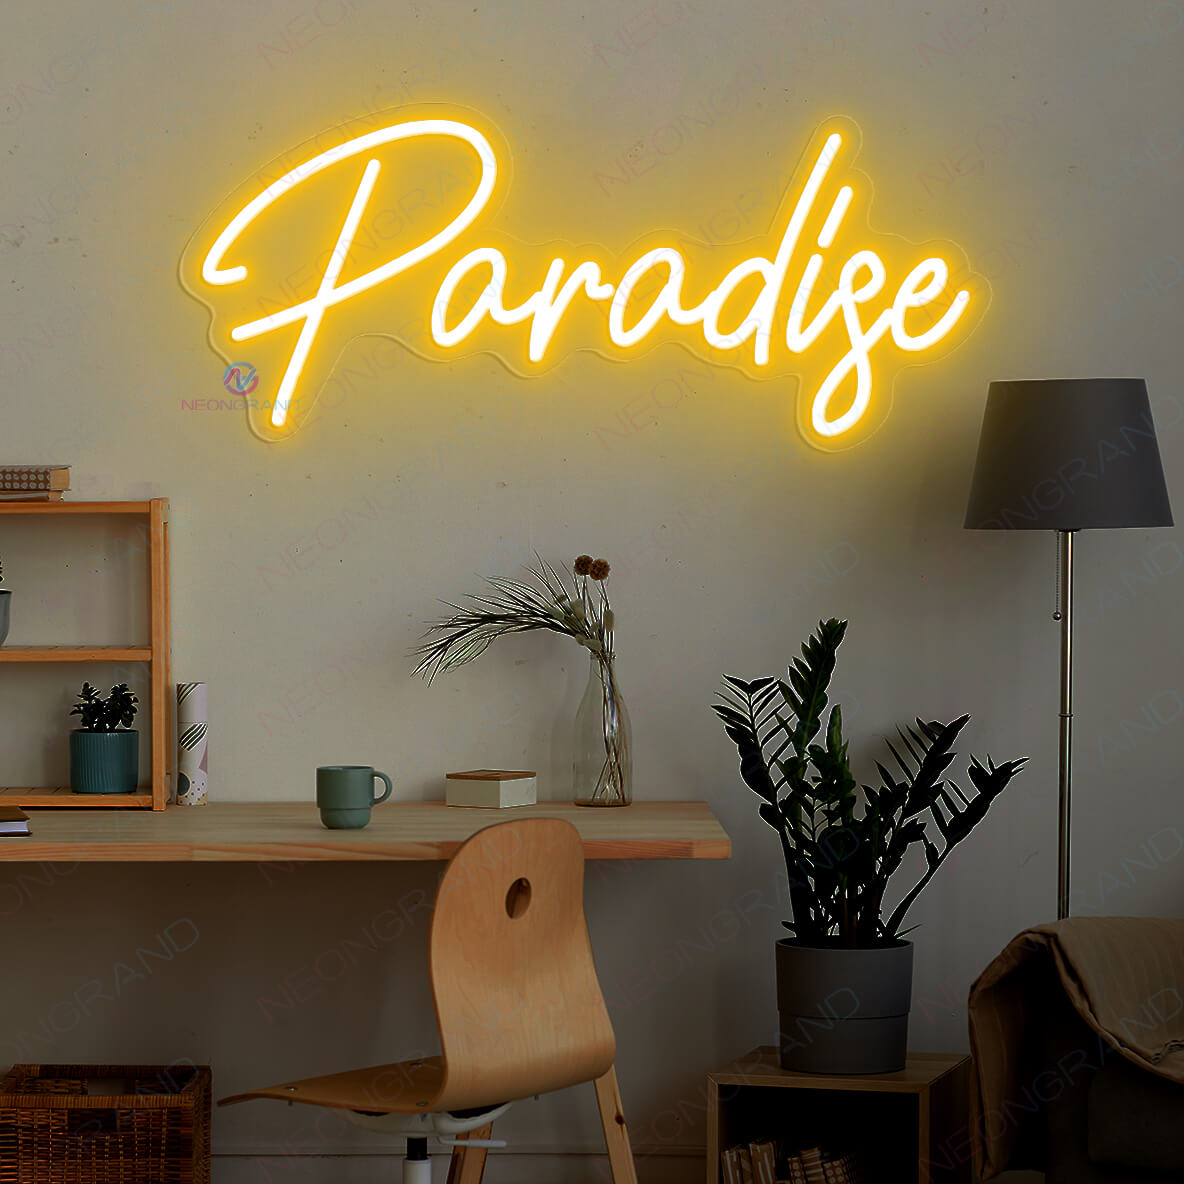 Paradise Neon Sign Bedroom Led Light Up Sign orange yellow1